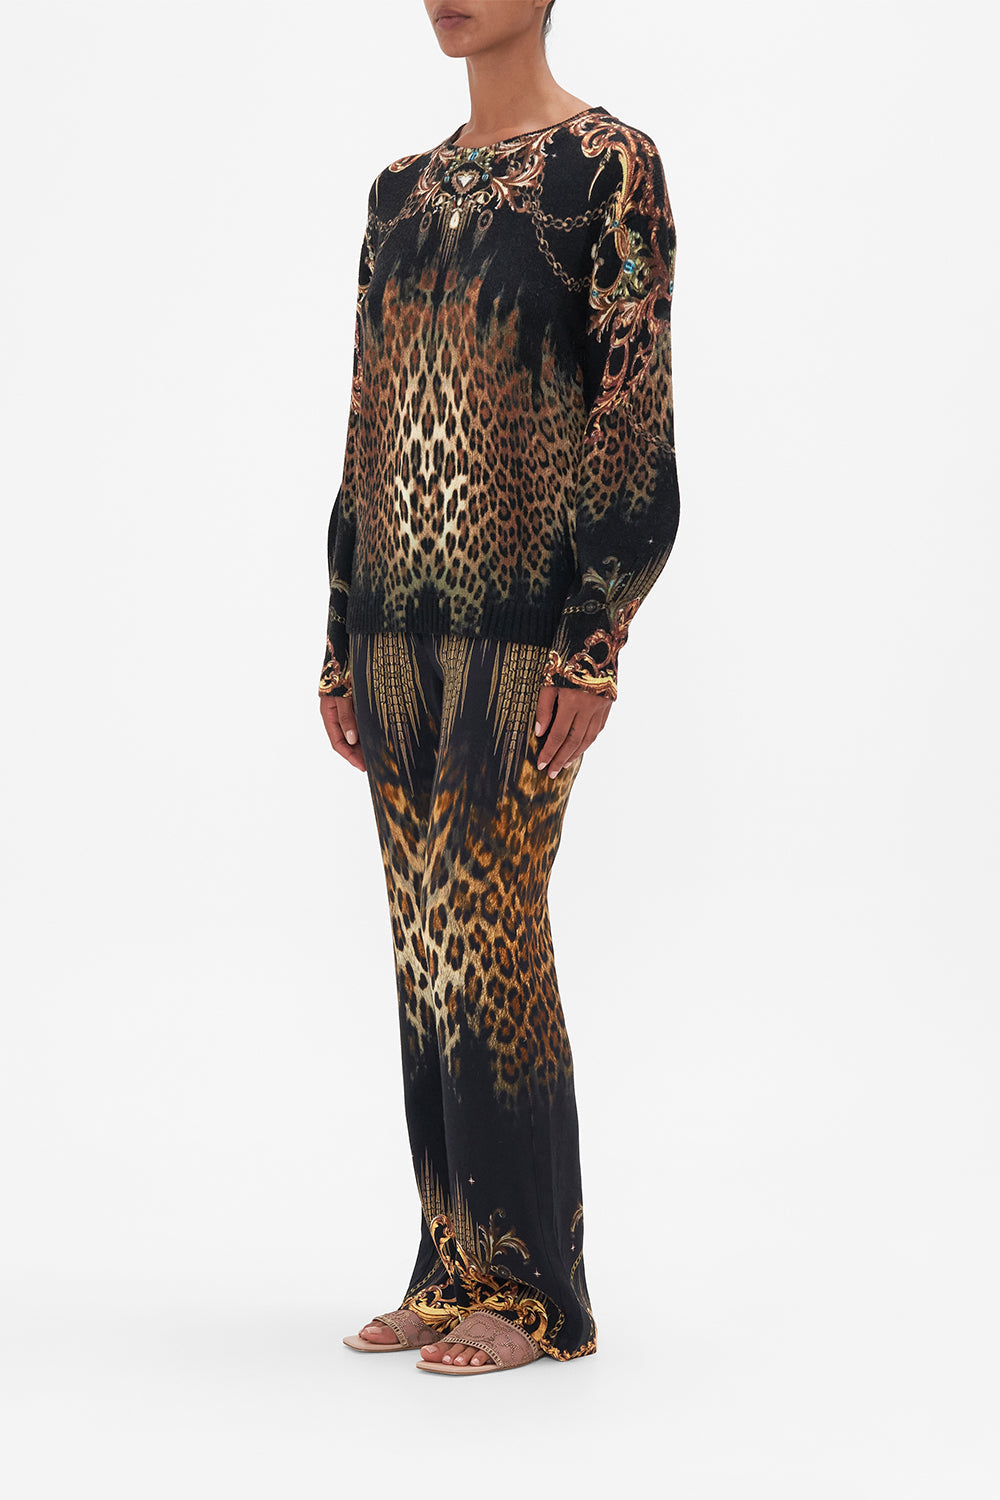 Side view of model wearing CAMILLA leopard print wool jumper in Jungle Dreaming print